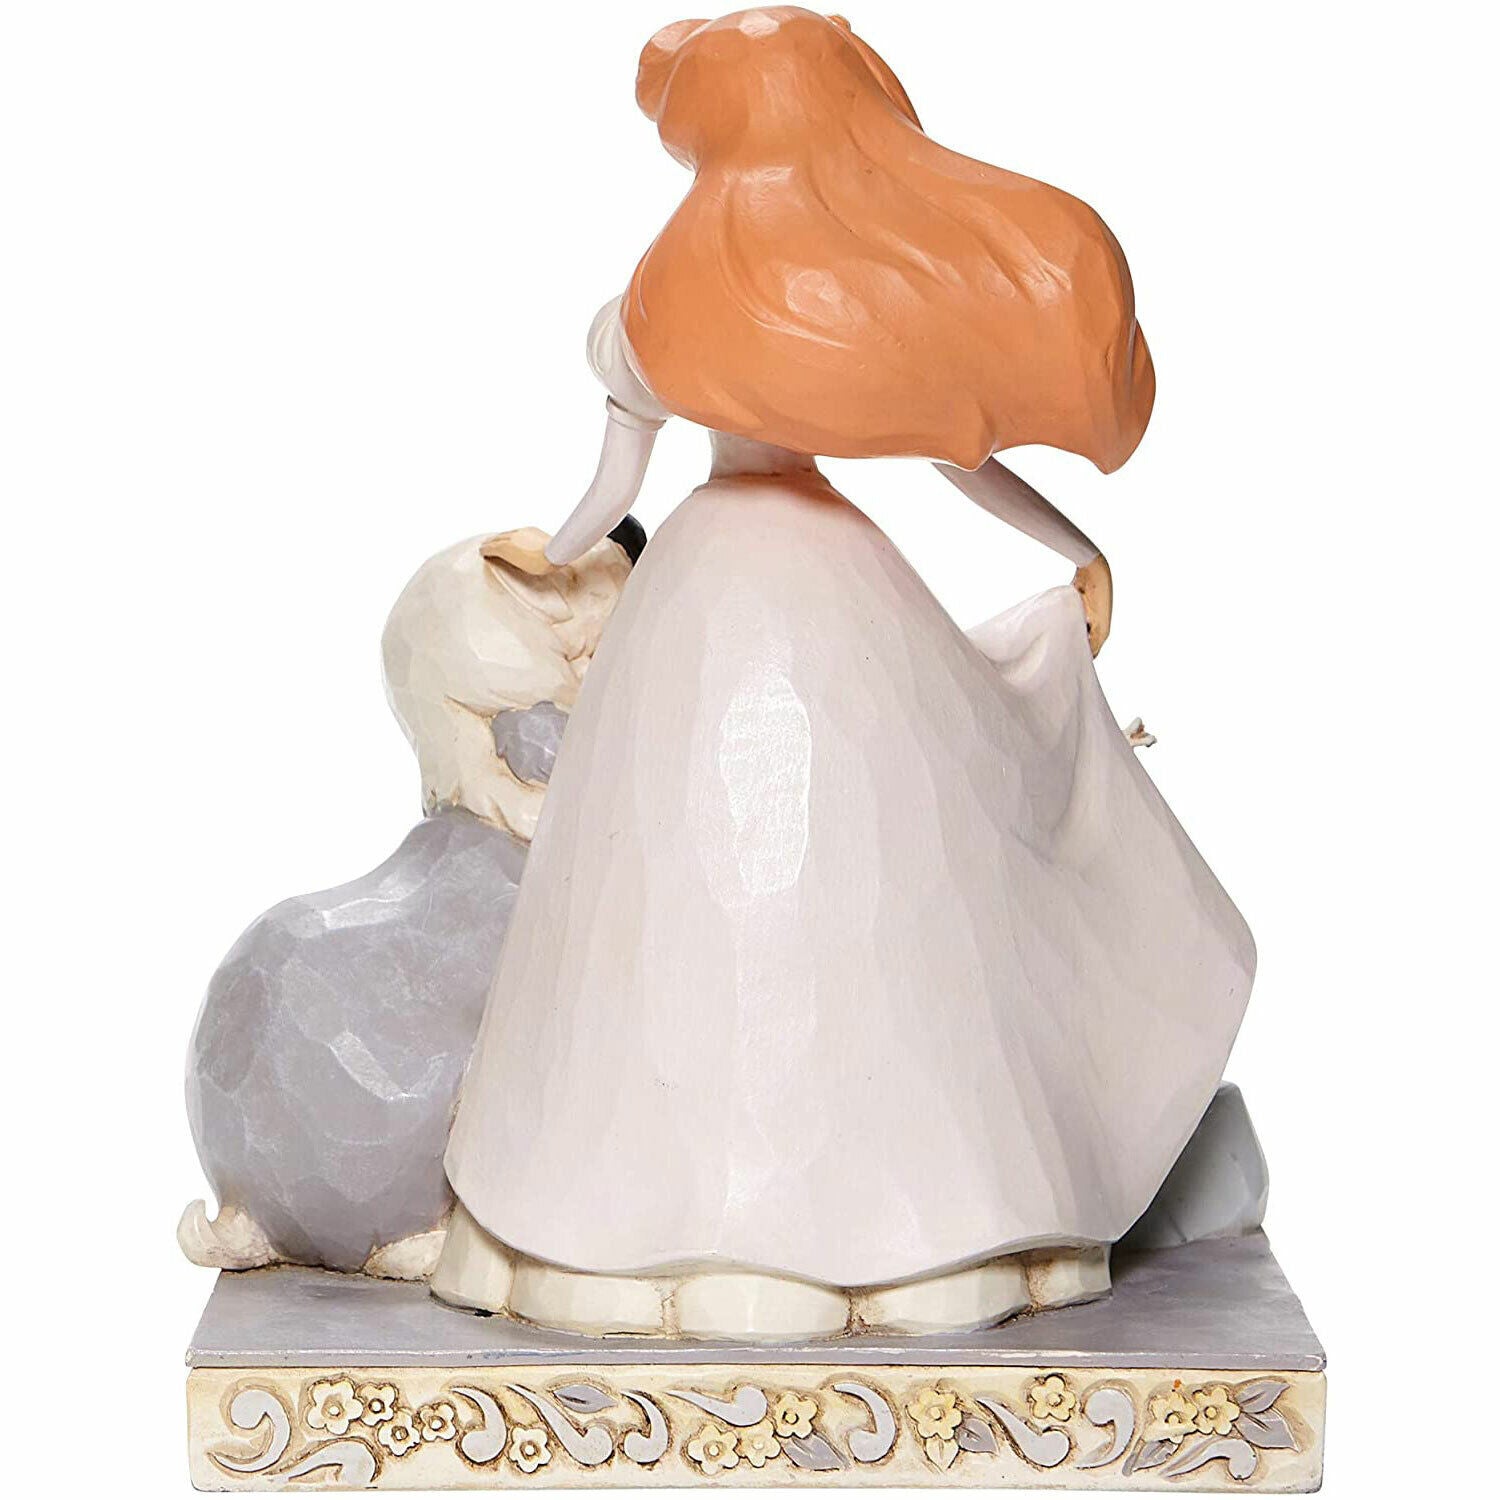 Disney Traditions Spirited Siren Figurine - White Woodland Ariel - New in Box